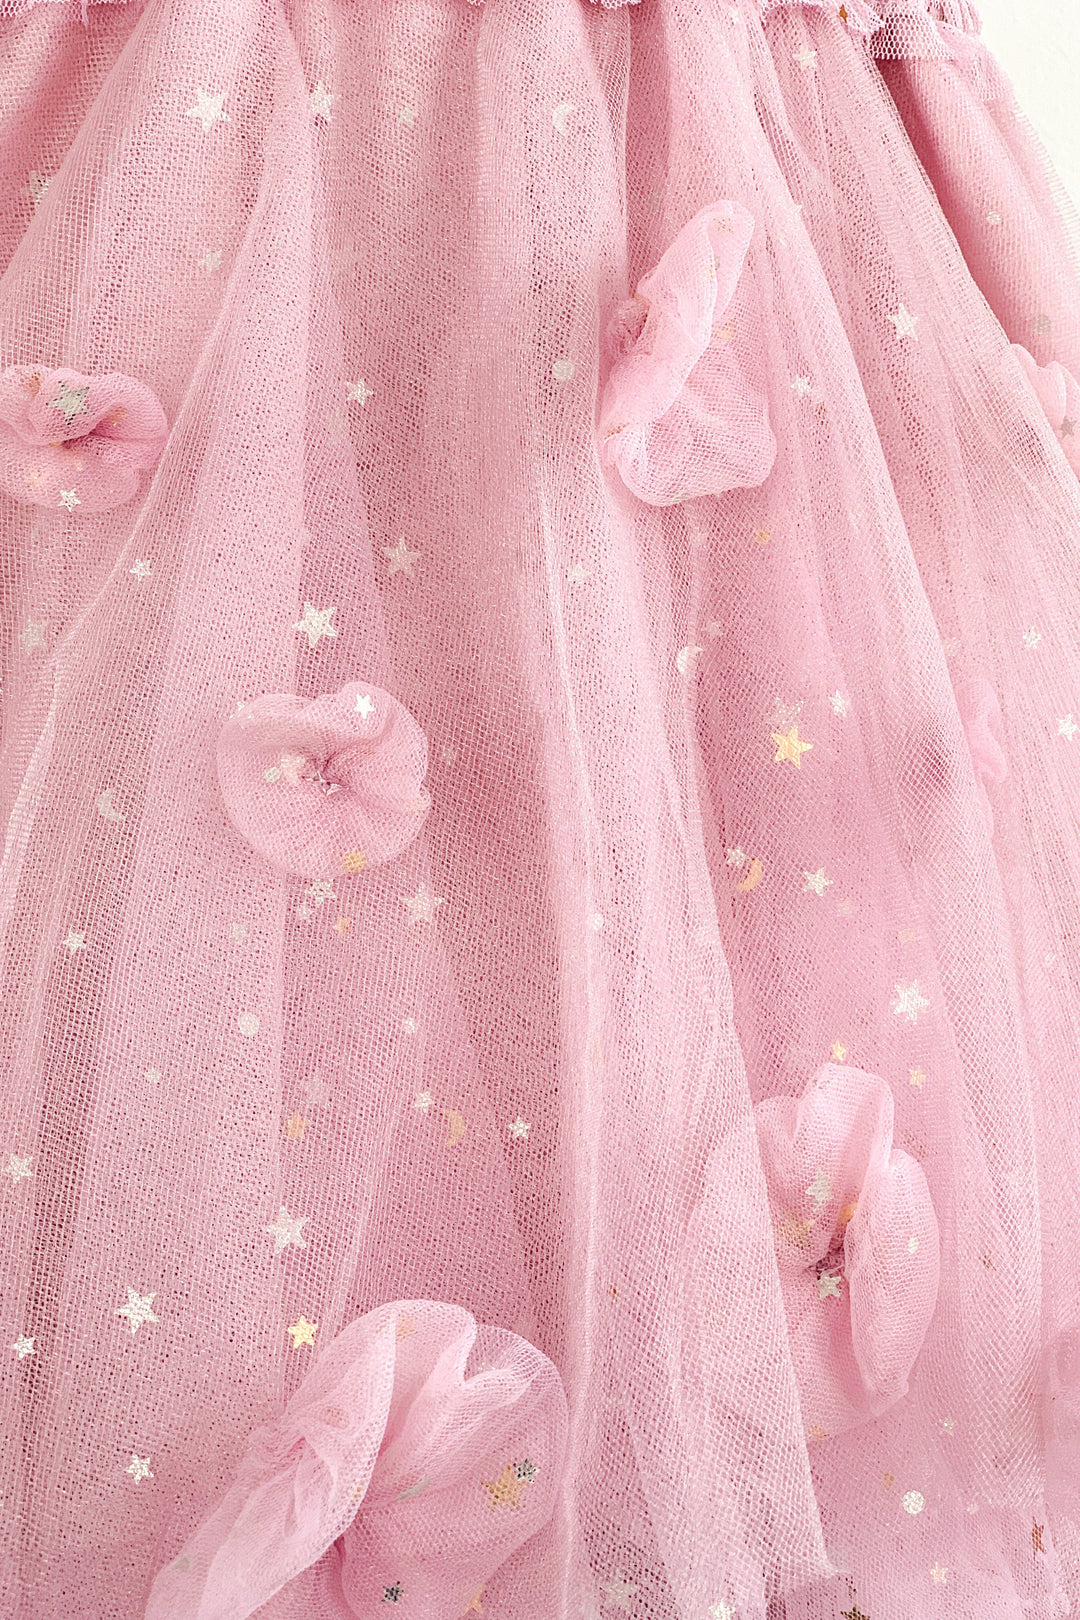 Luna Luna "Ava" Raspberry Celestial Fairy Wing Dress | Millie and John